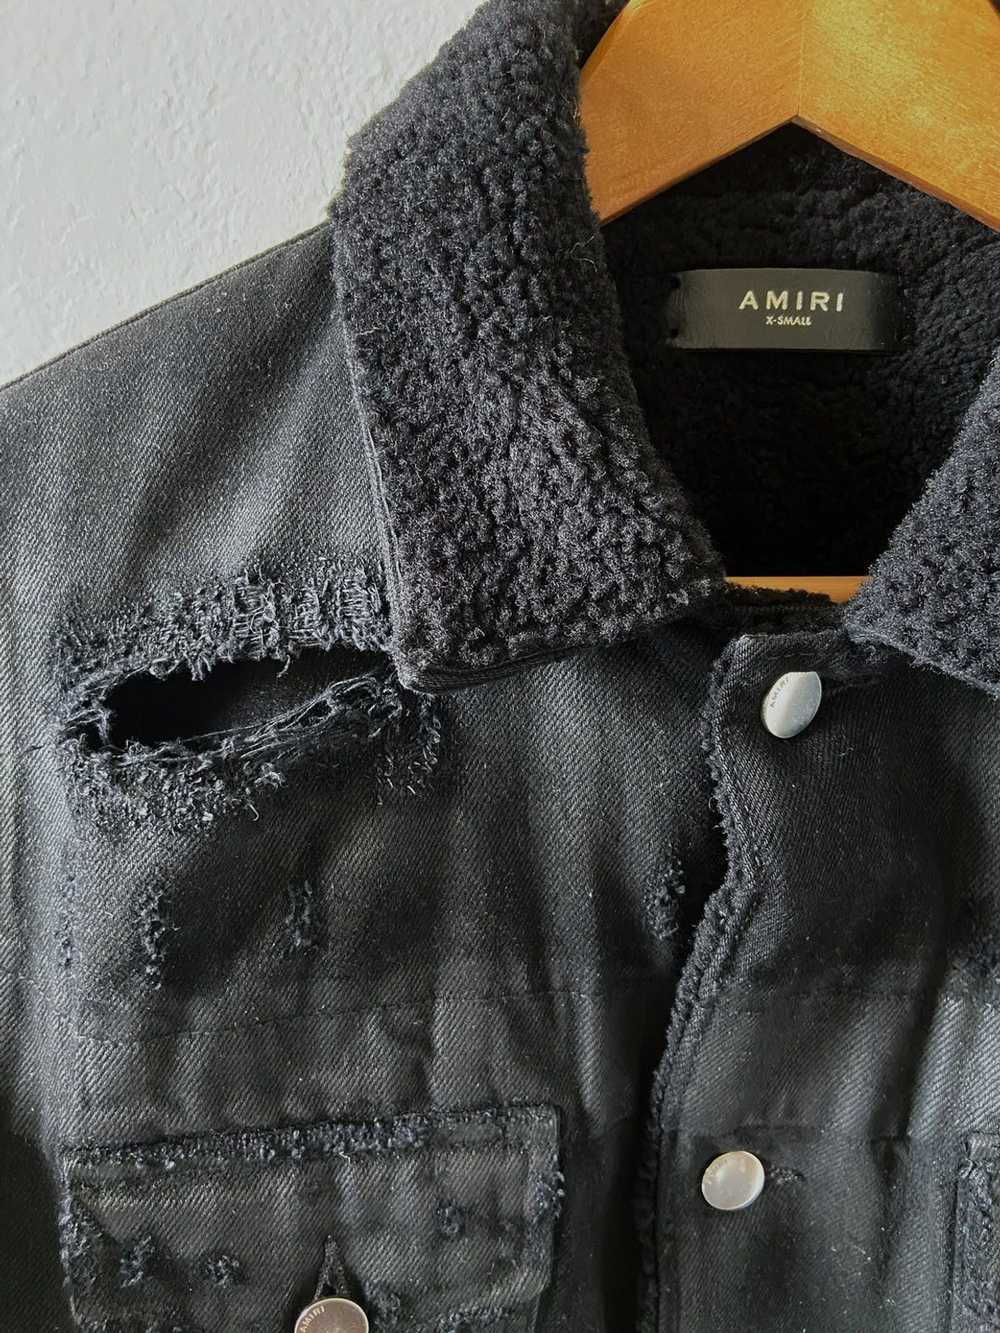 Amiri AMIRI denim and shearling jacket - image 3